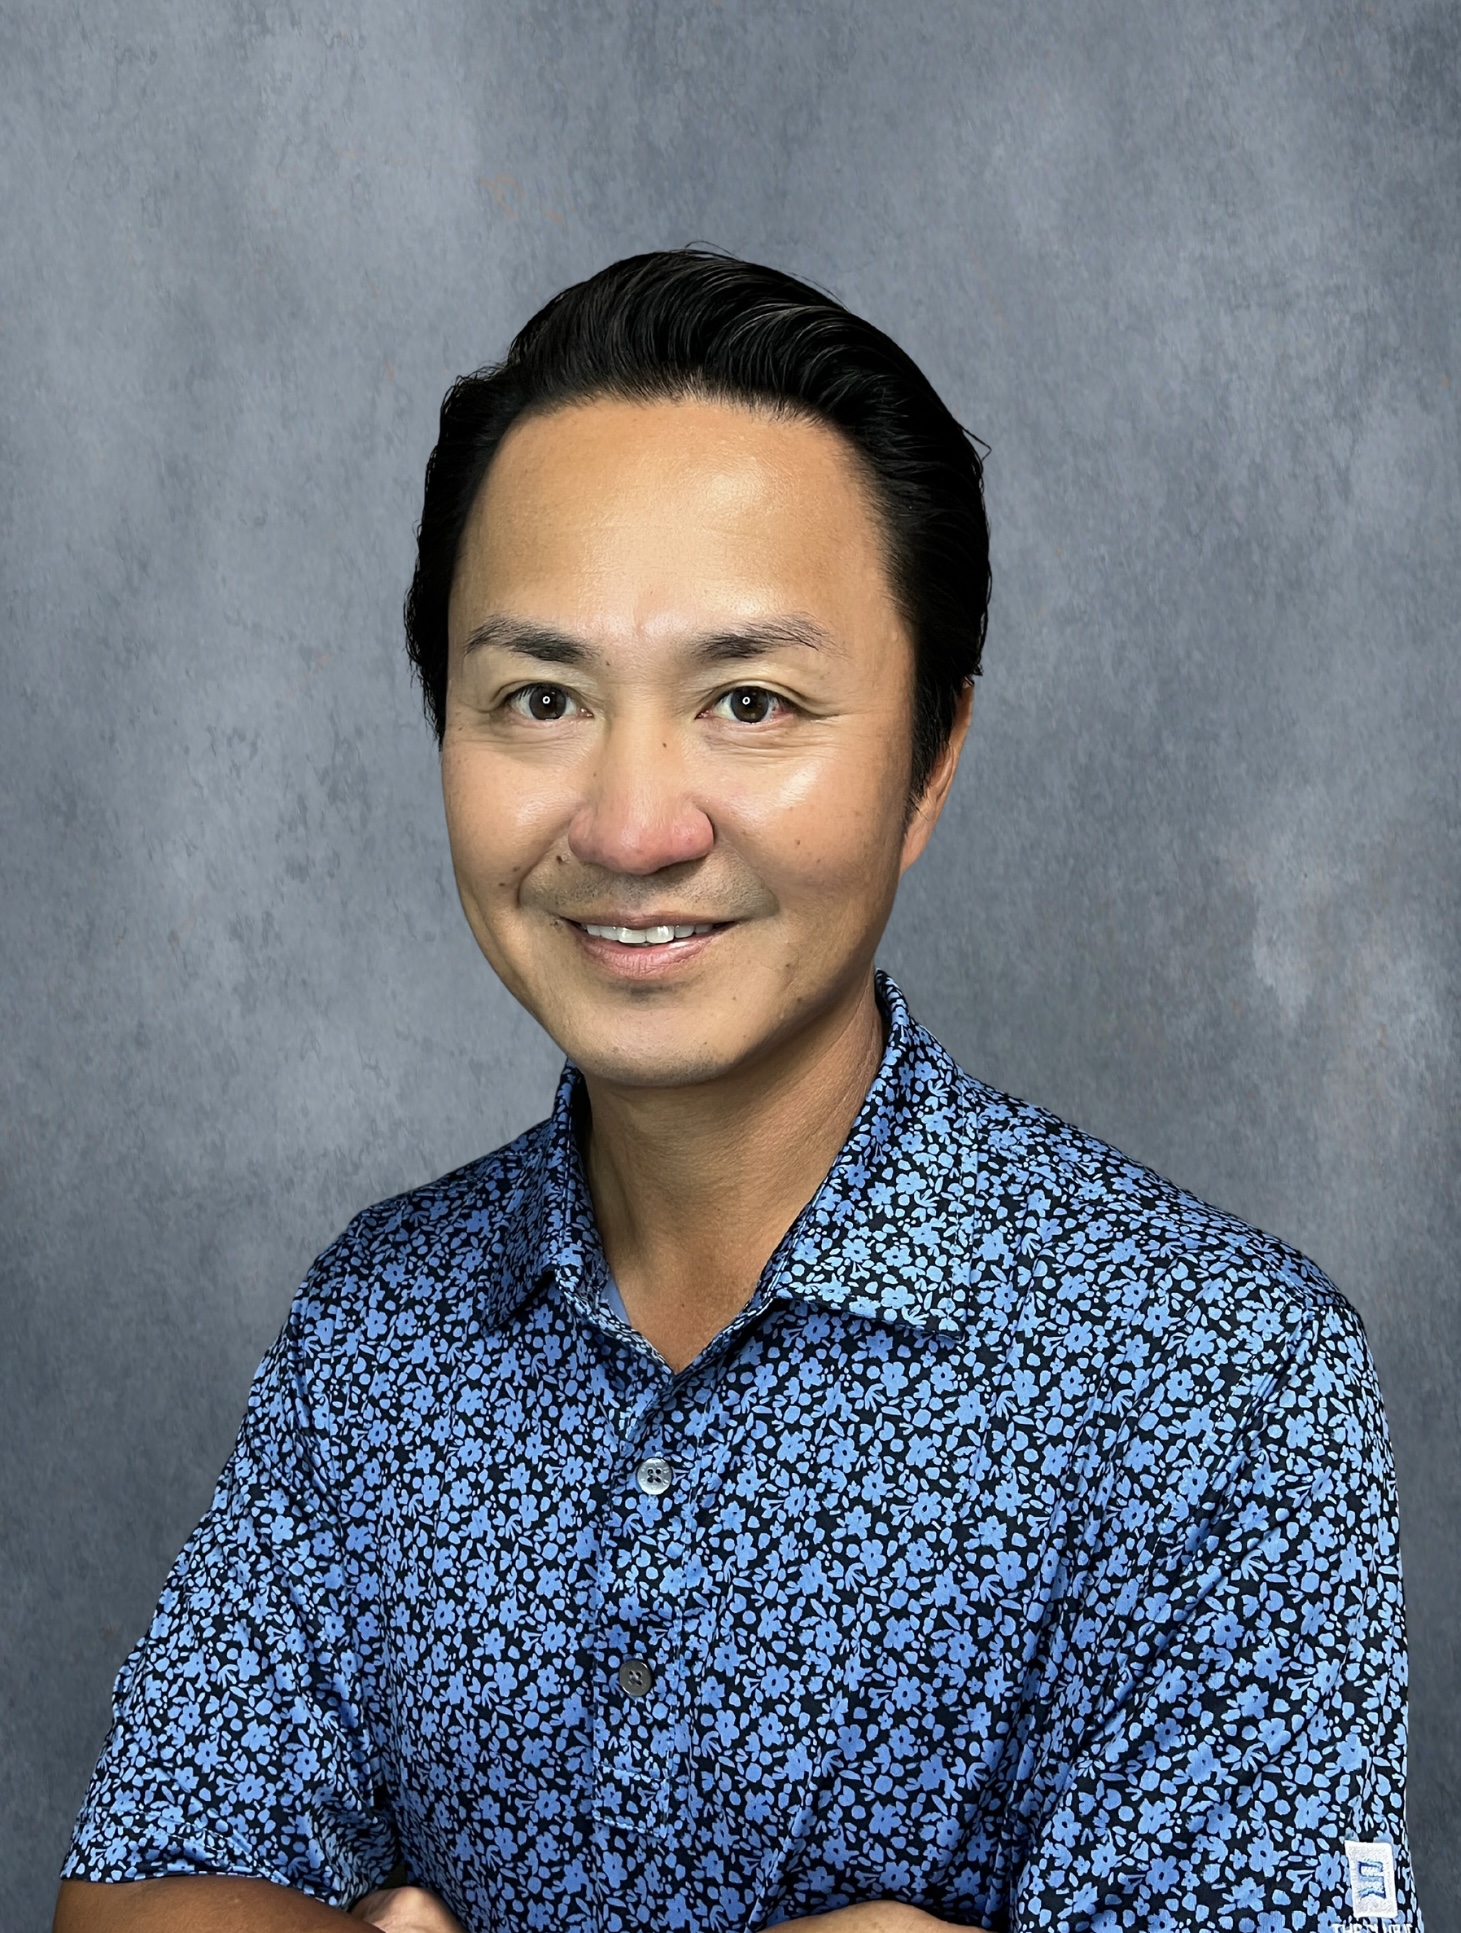 Dr. David Choe